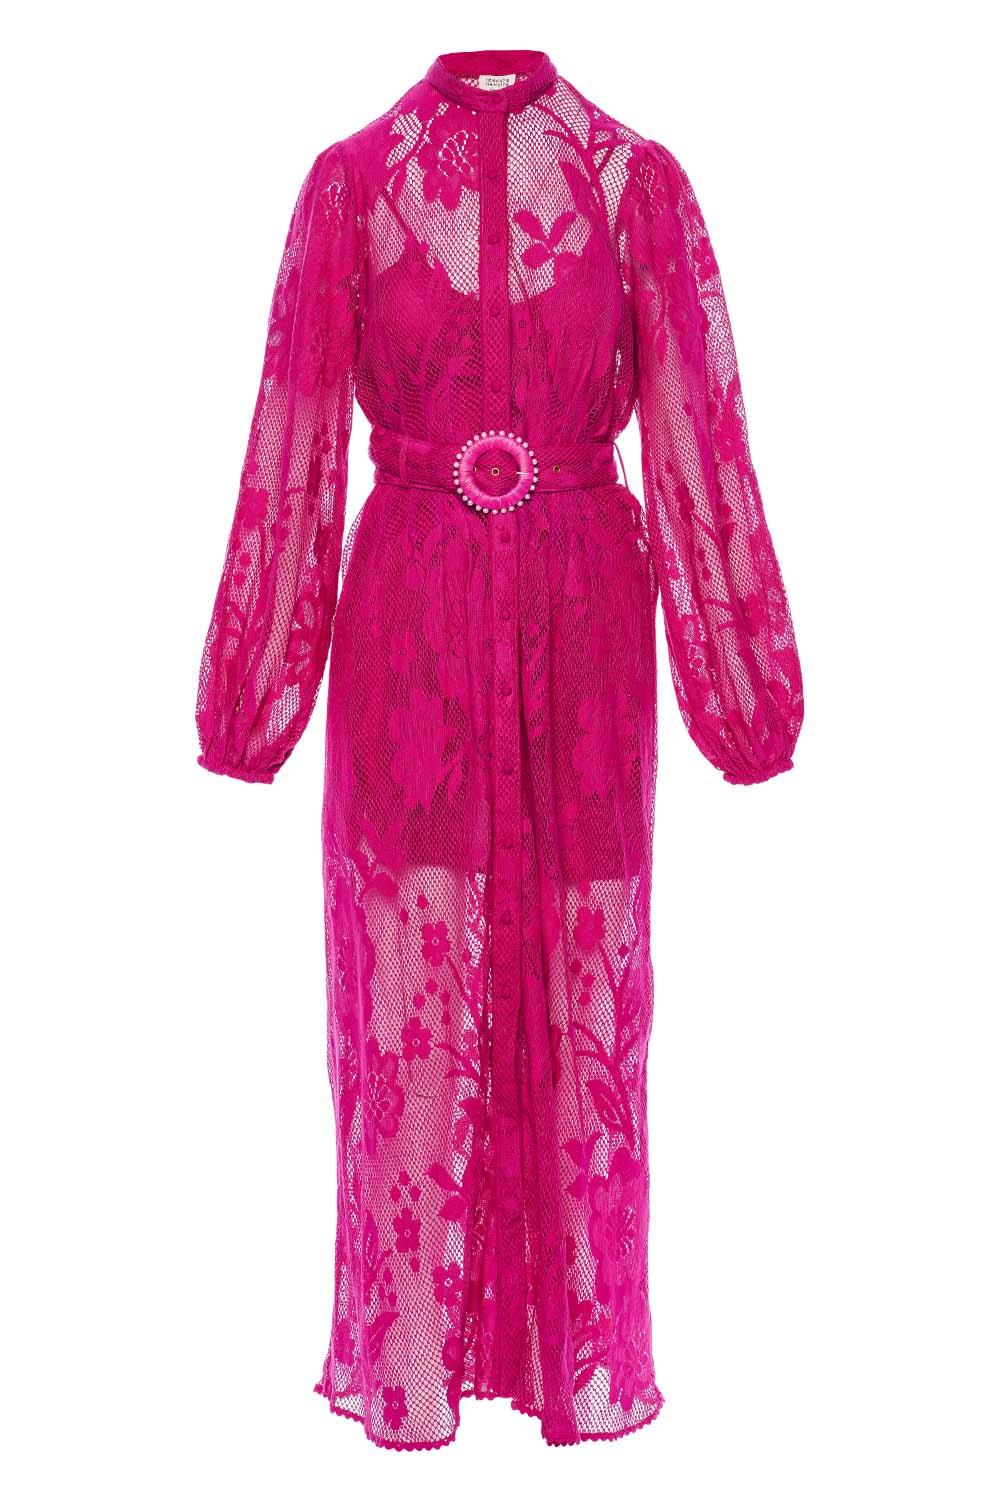 Hemant & Nandita Nysa Belted Maxi Dress in Pink | Lyst